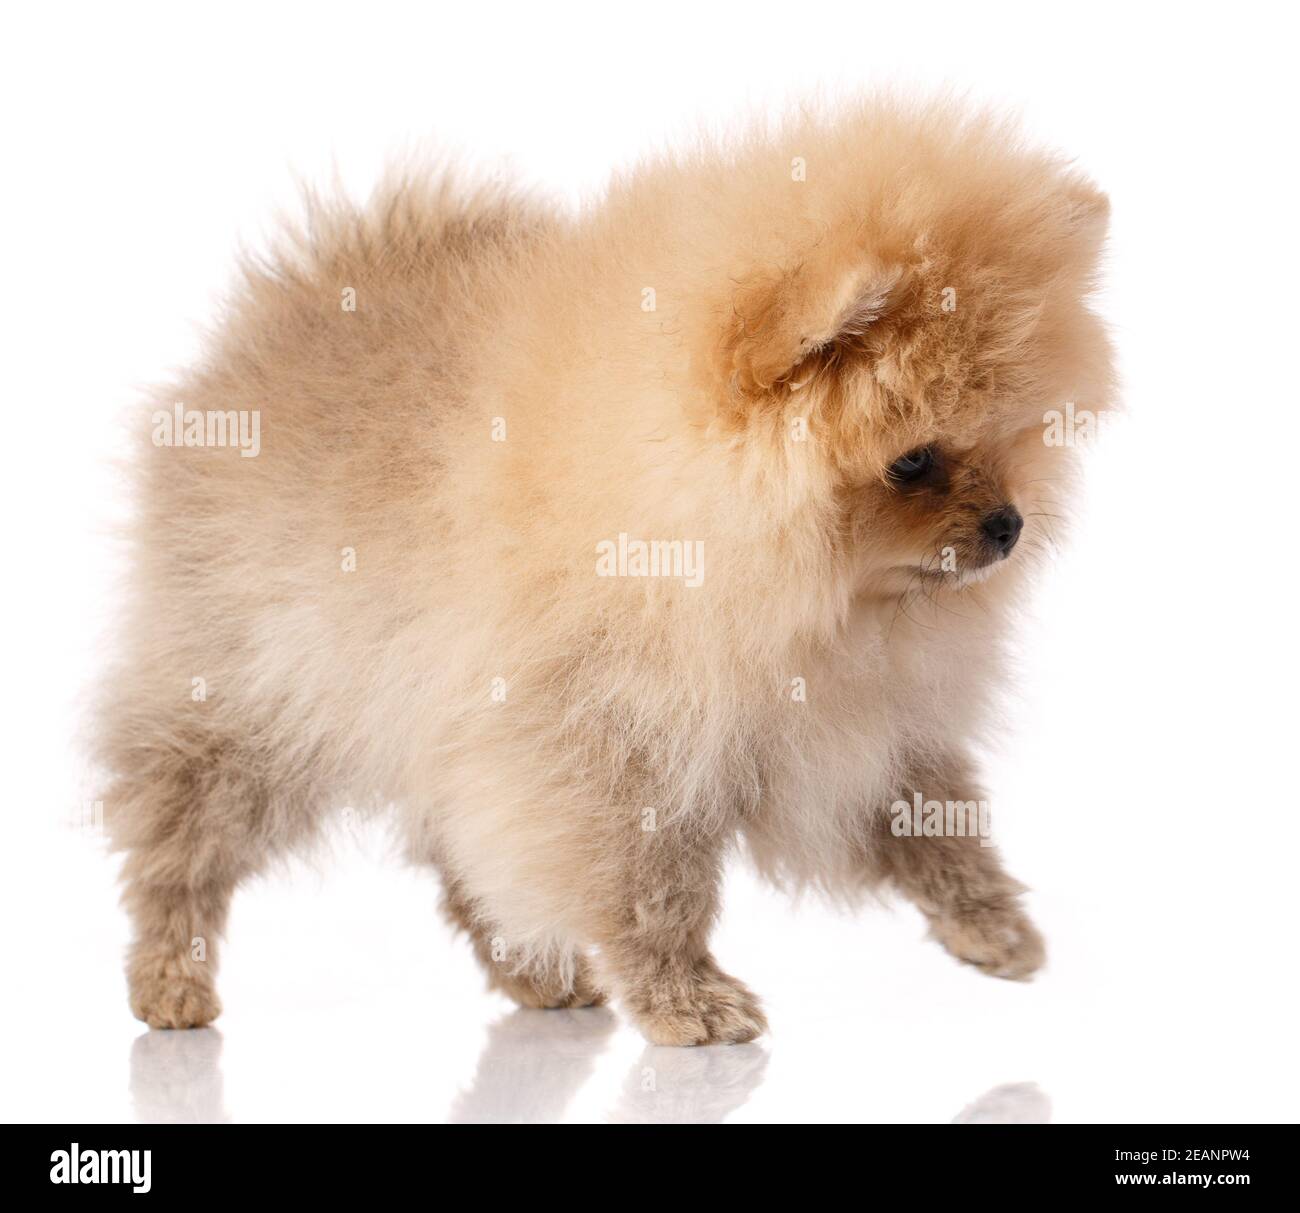 Fluffy light brown Pomeranian Spitz stands on a white background. Stock Photo